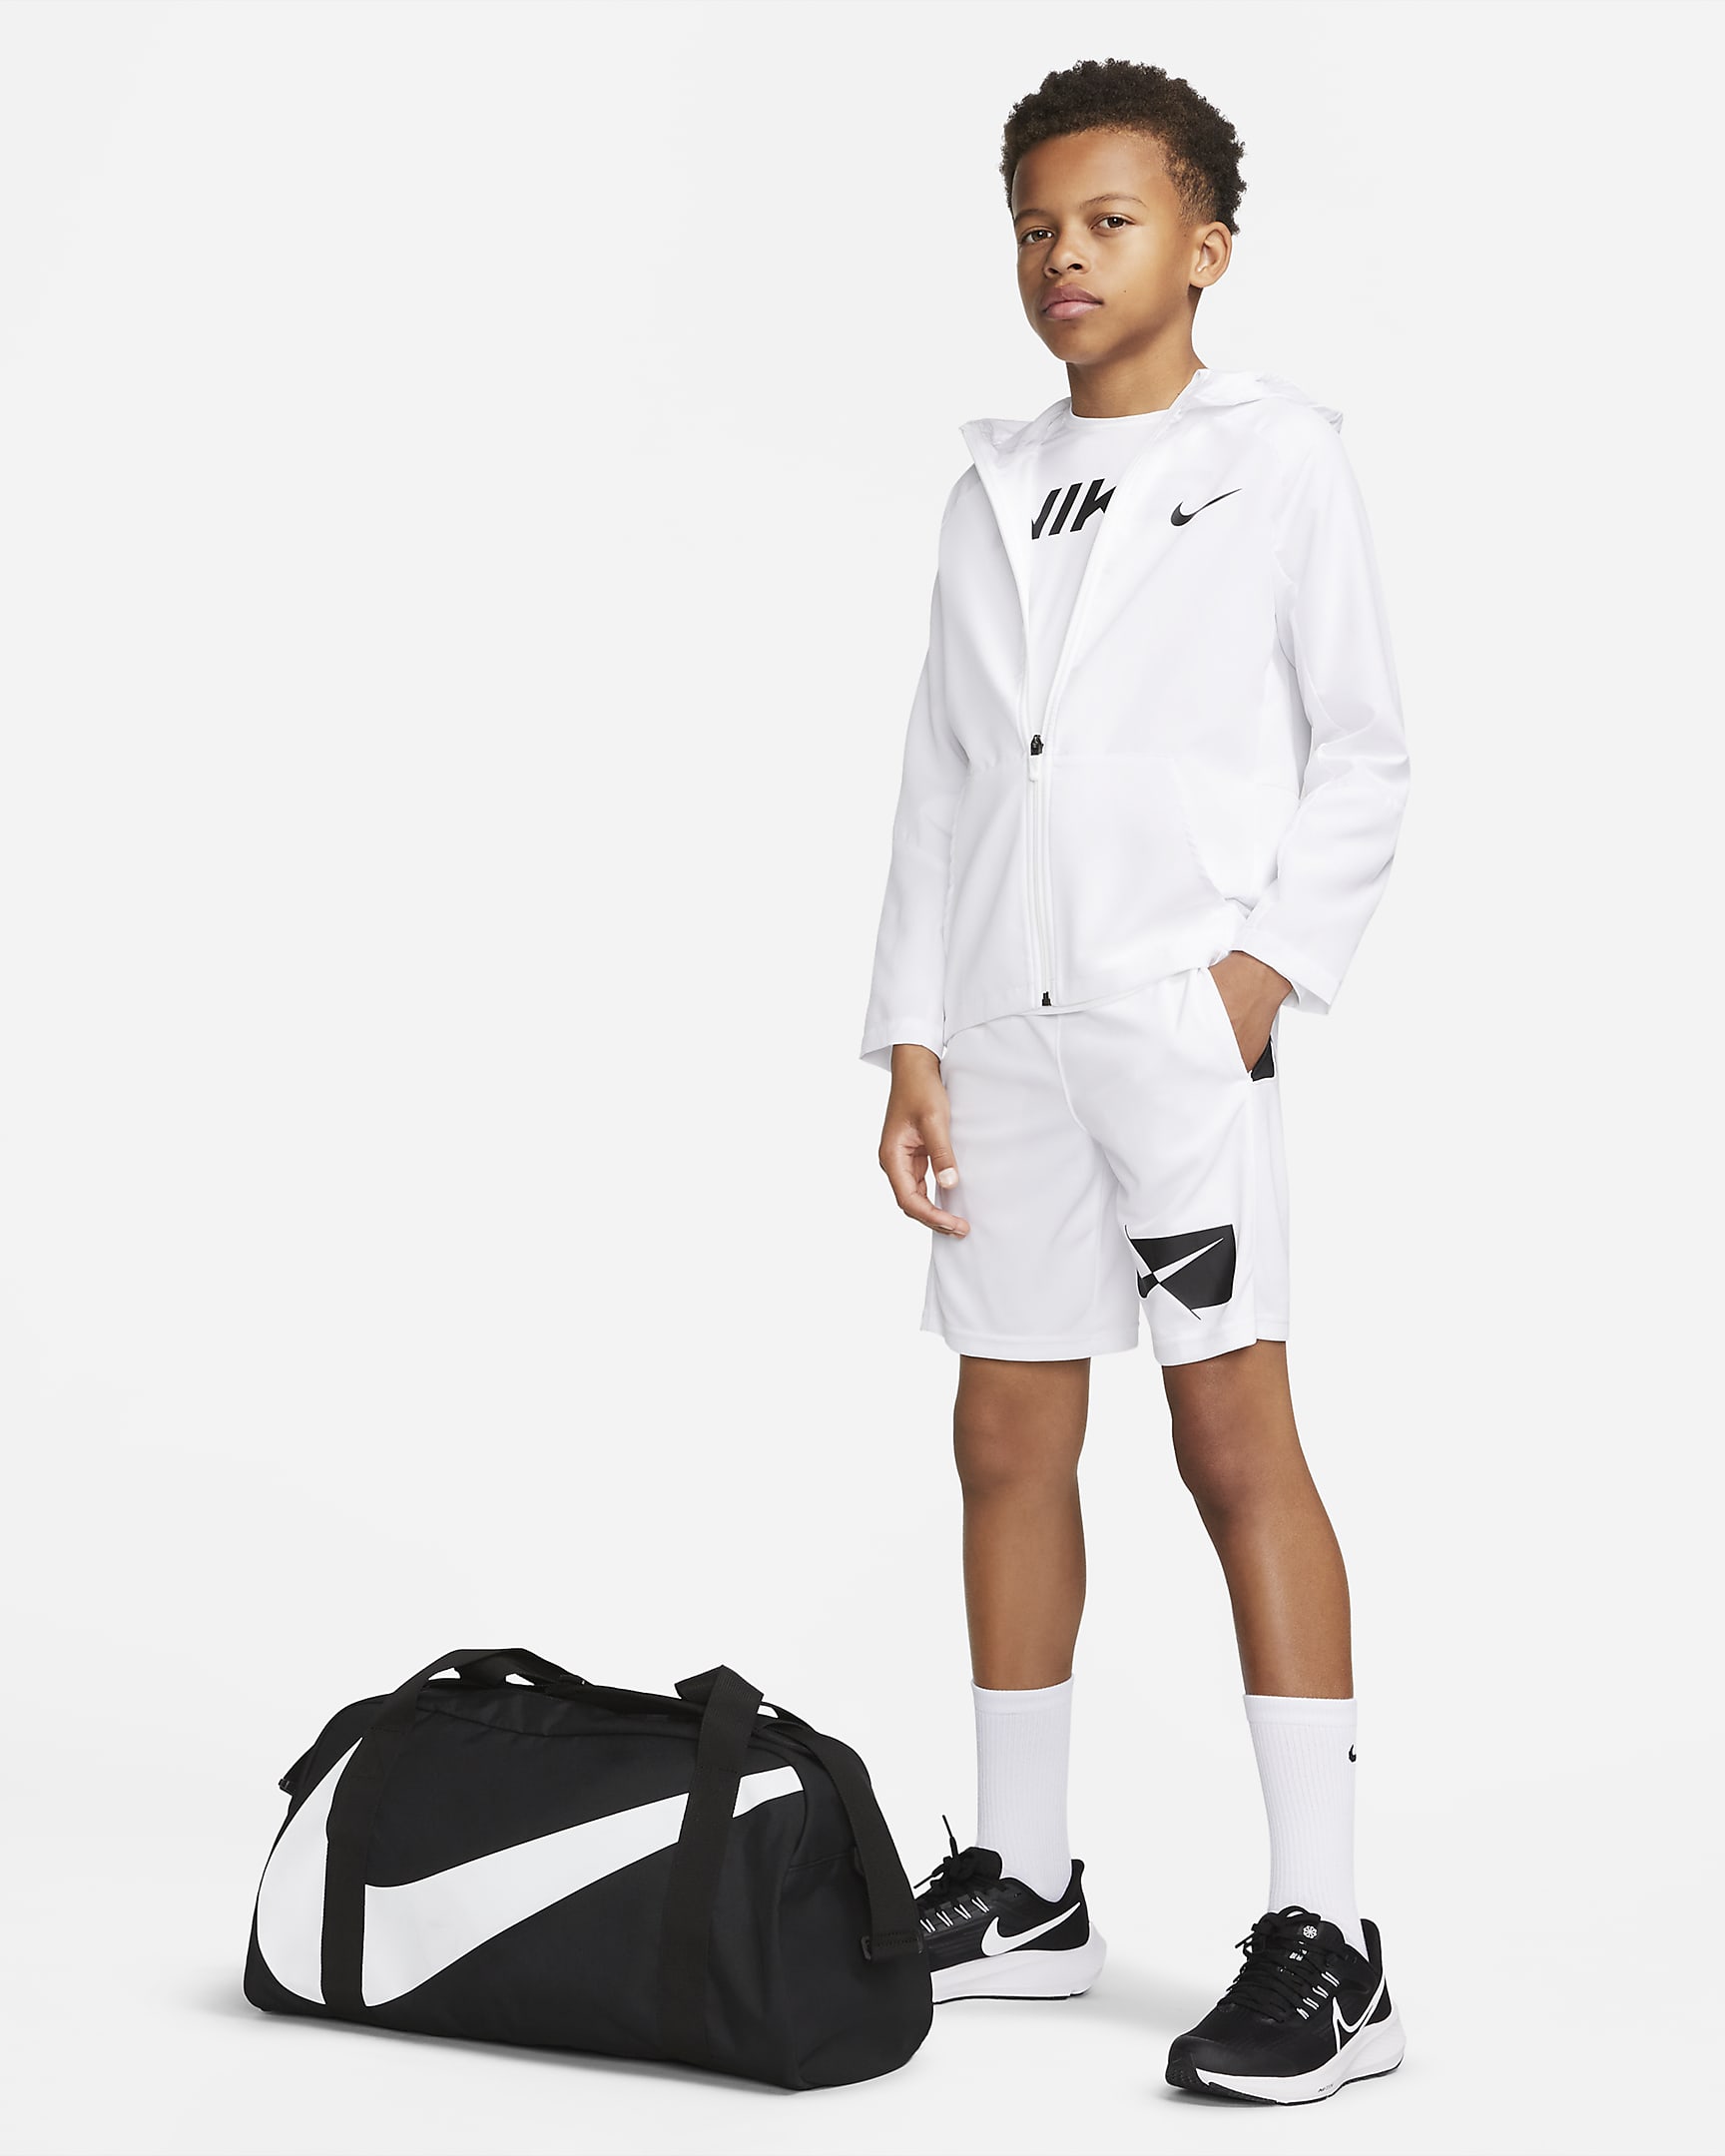 Väska Nike Gym Club för barn (25 l) - Svart/Svart/Vit